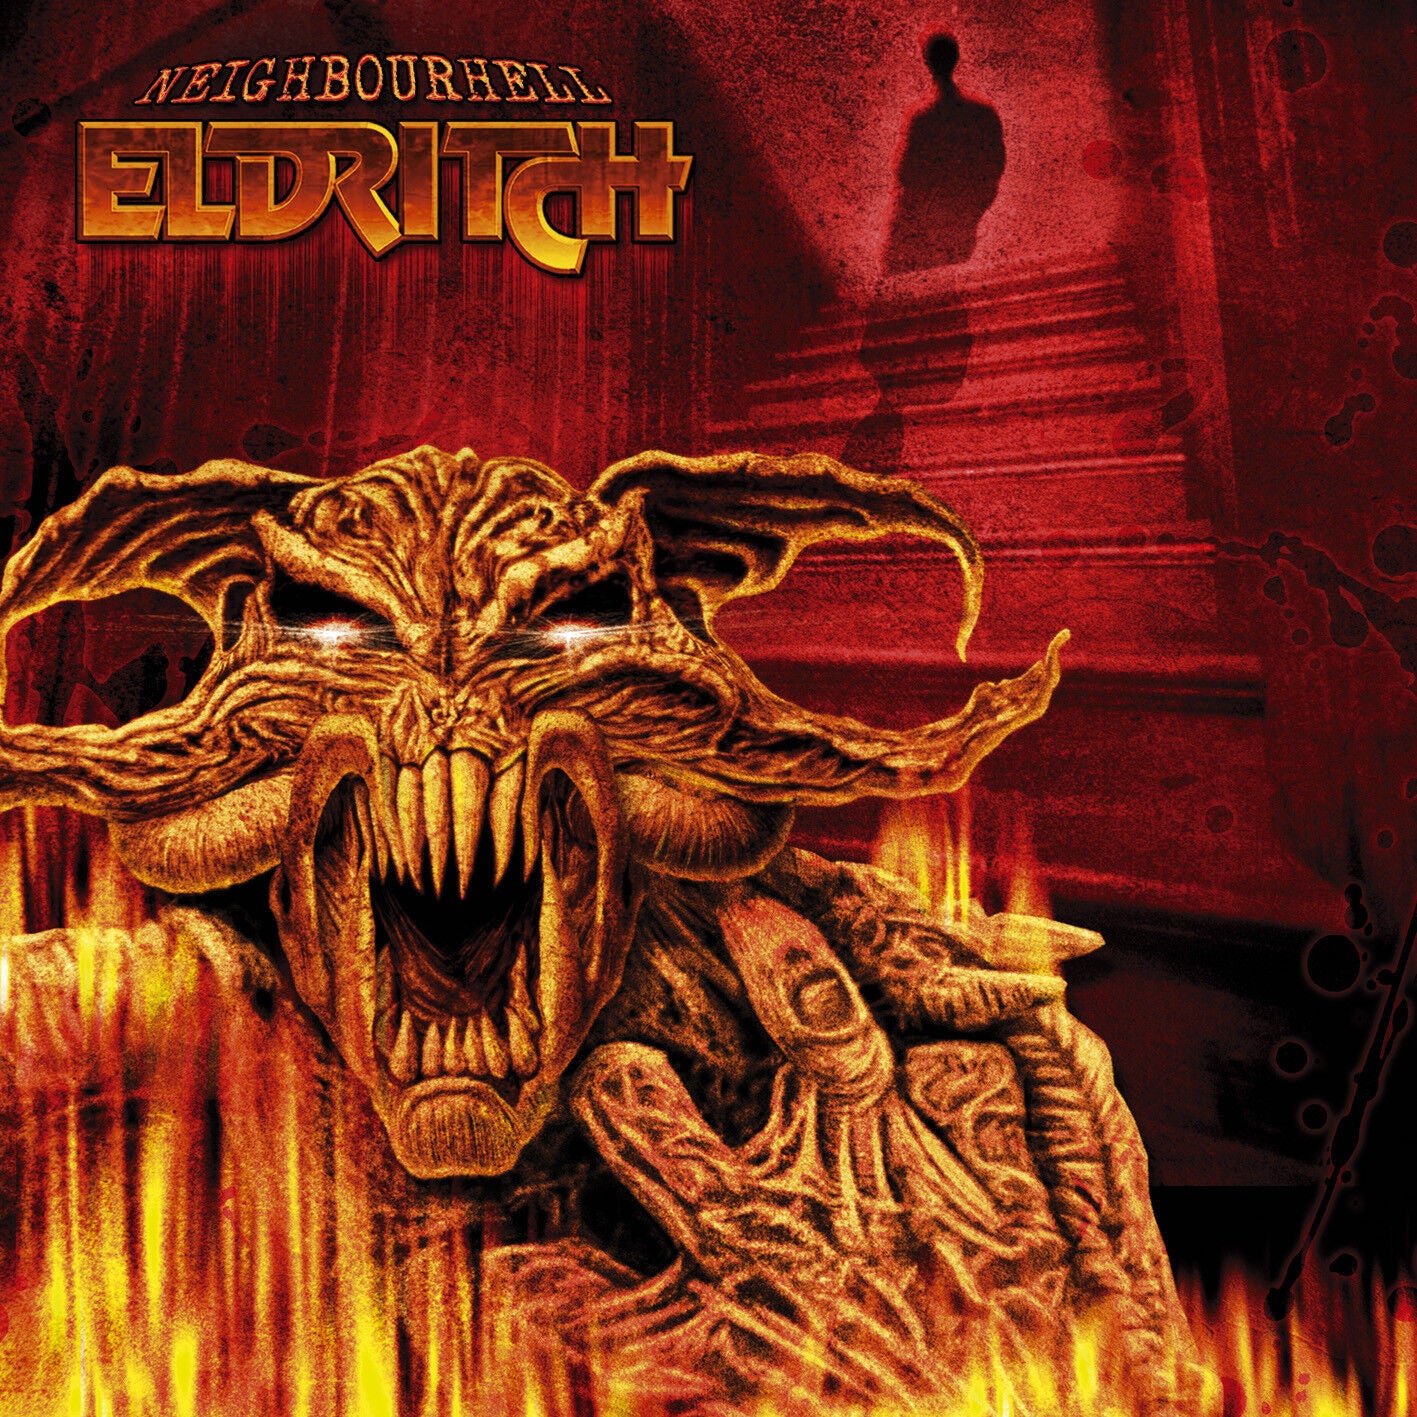 ELDRITCH - Neighbourhell CD 2006 Ltd. Digipak + Bonus Tracks + Poster + Sticker